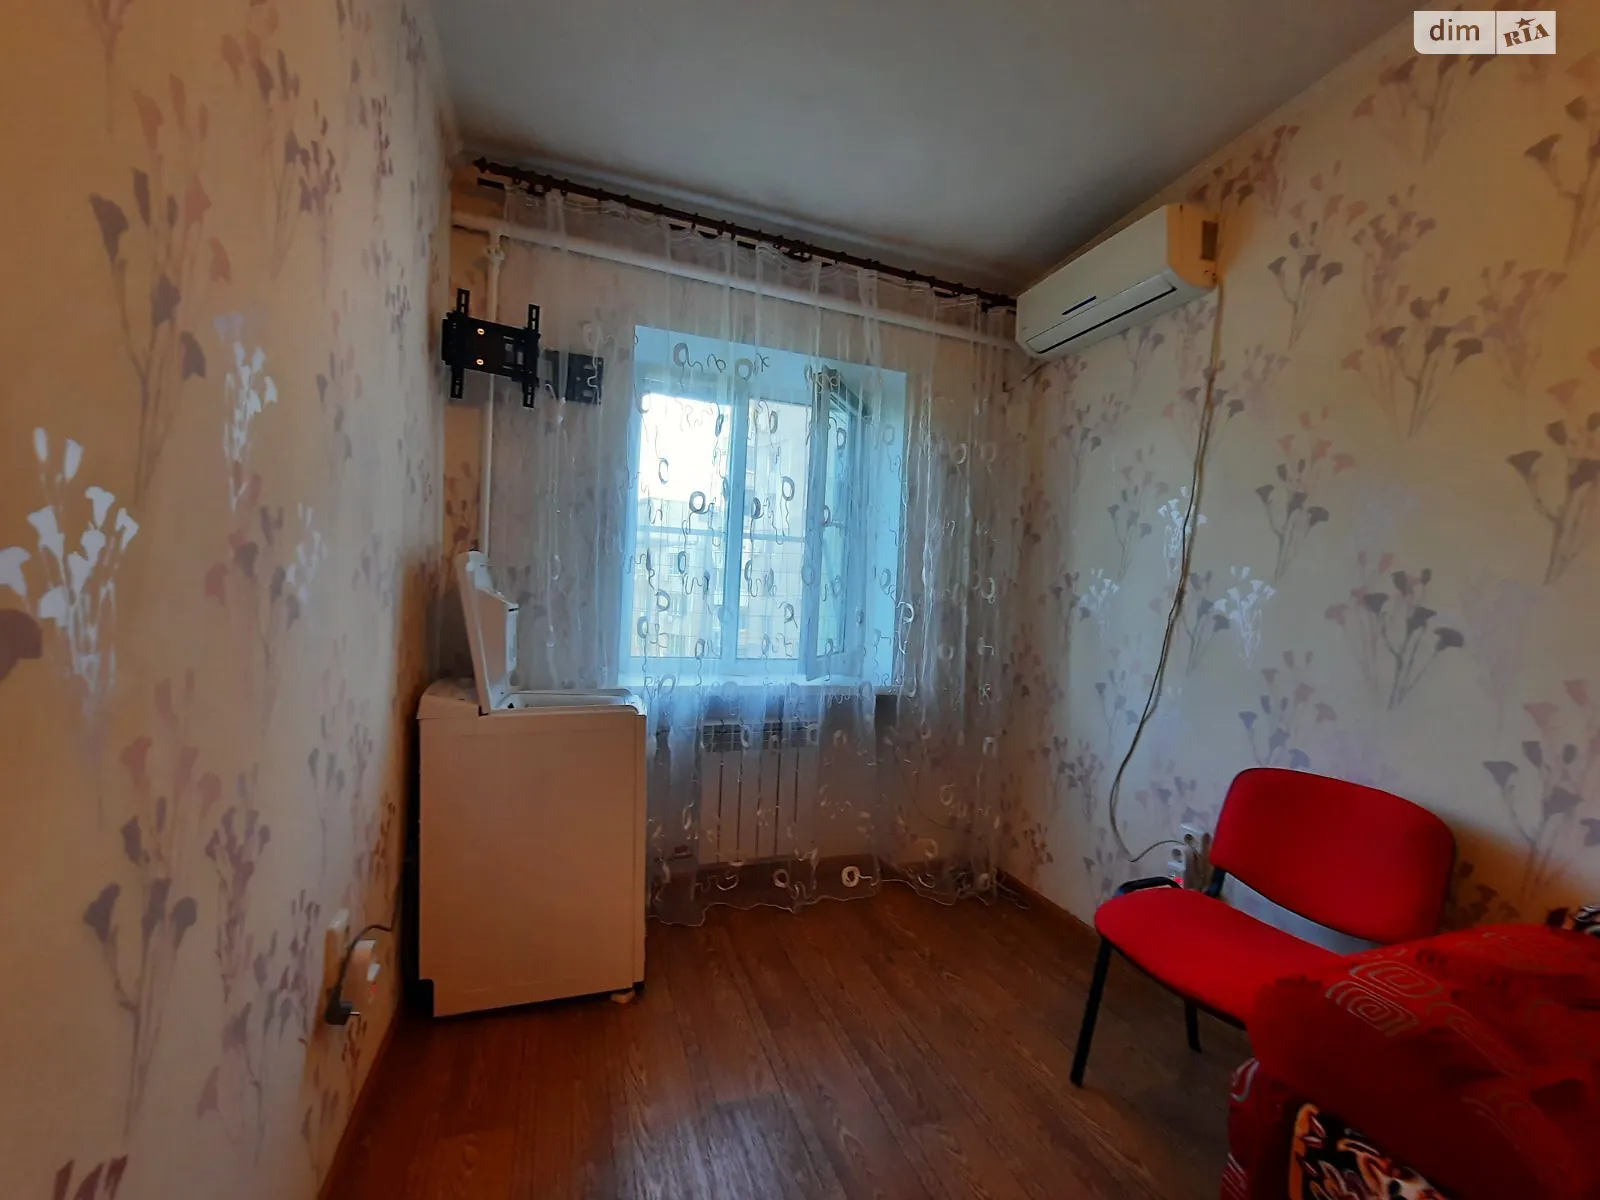 Продается комната 93 кв. м в Одессе, цена: 8000 $ - фото 1